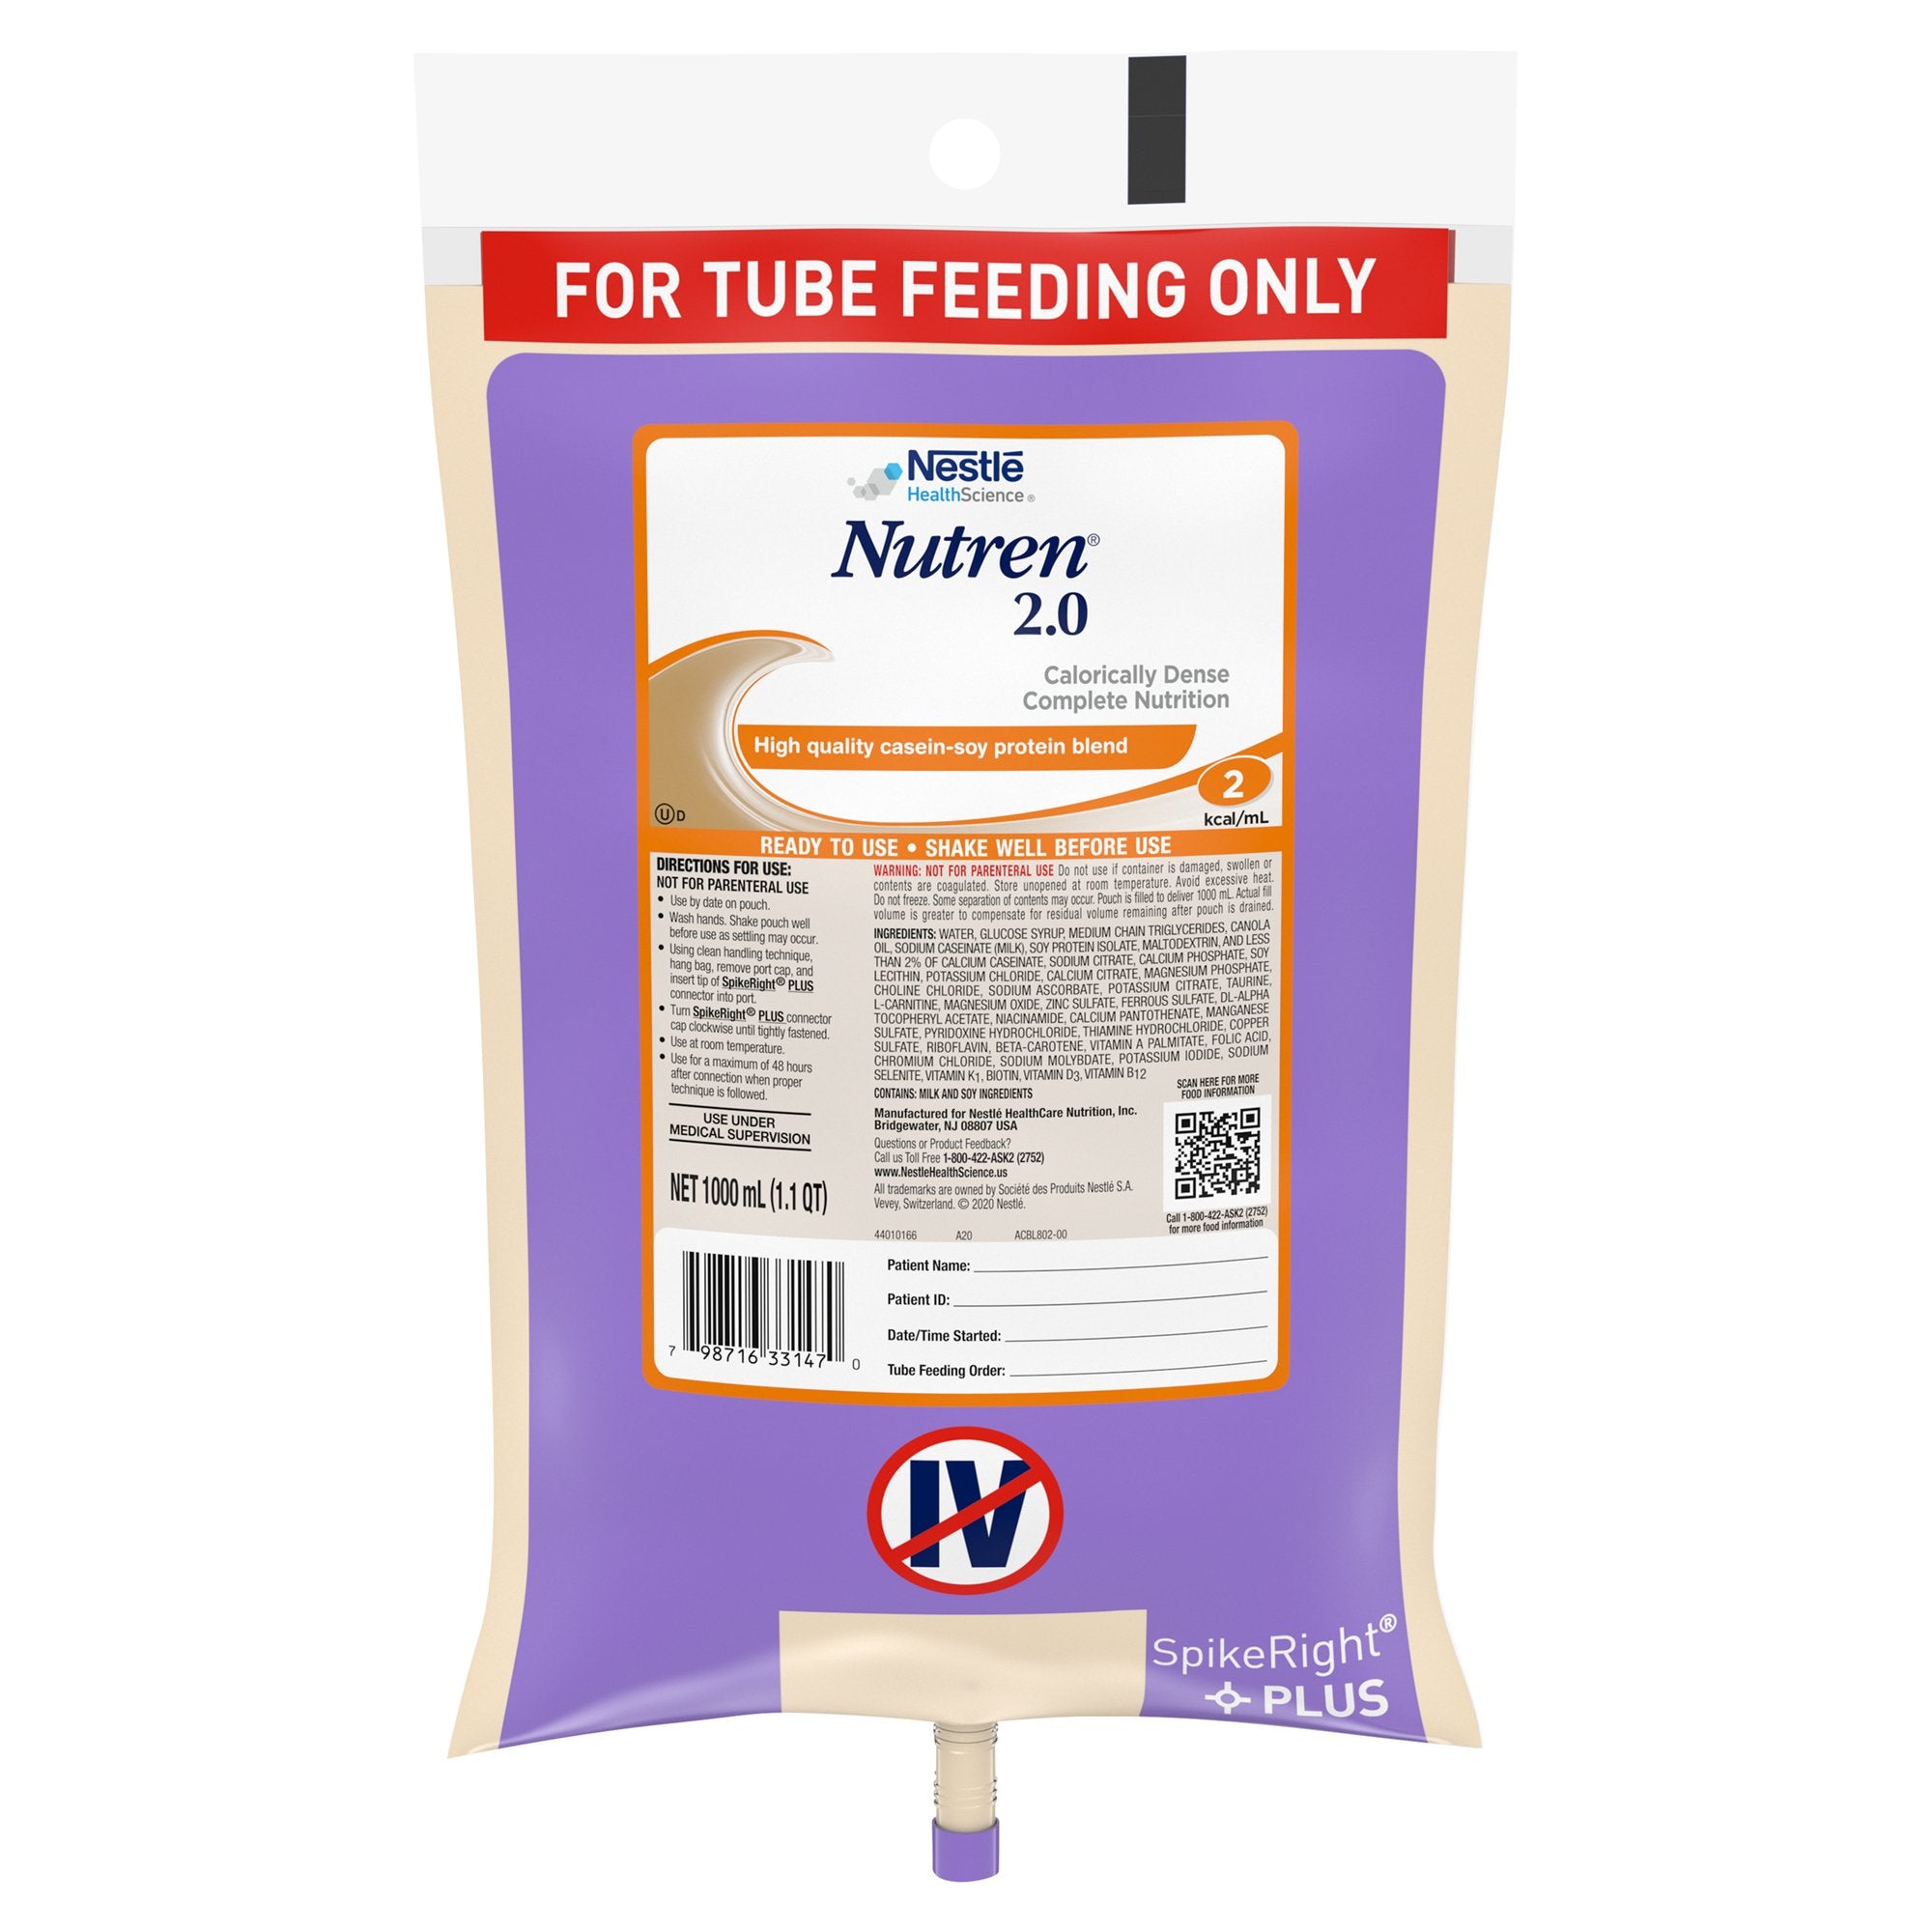 Nutren 2.0 Ready to Hang Tube Feeding Formula, 33.8 oz. Bag -Case of 6